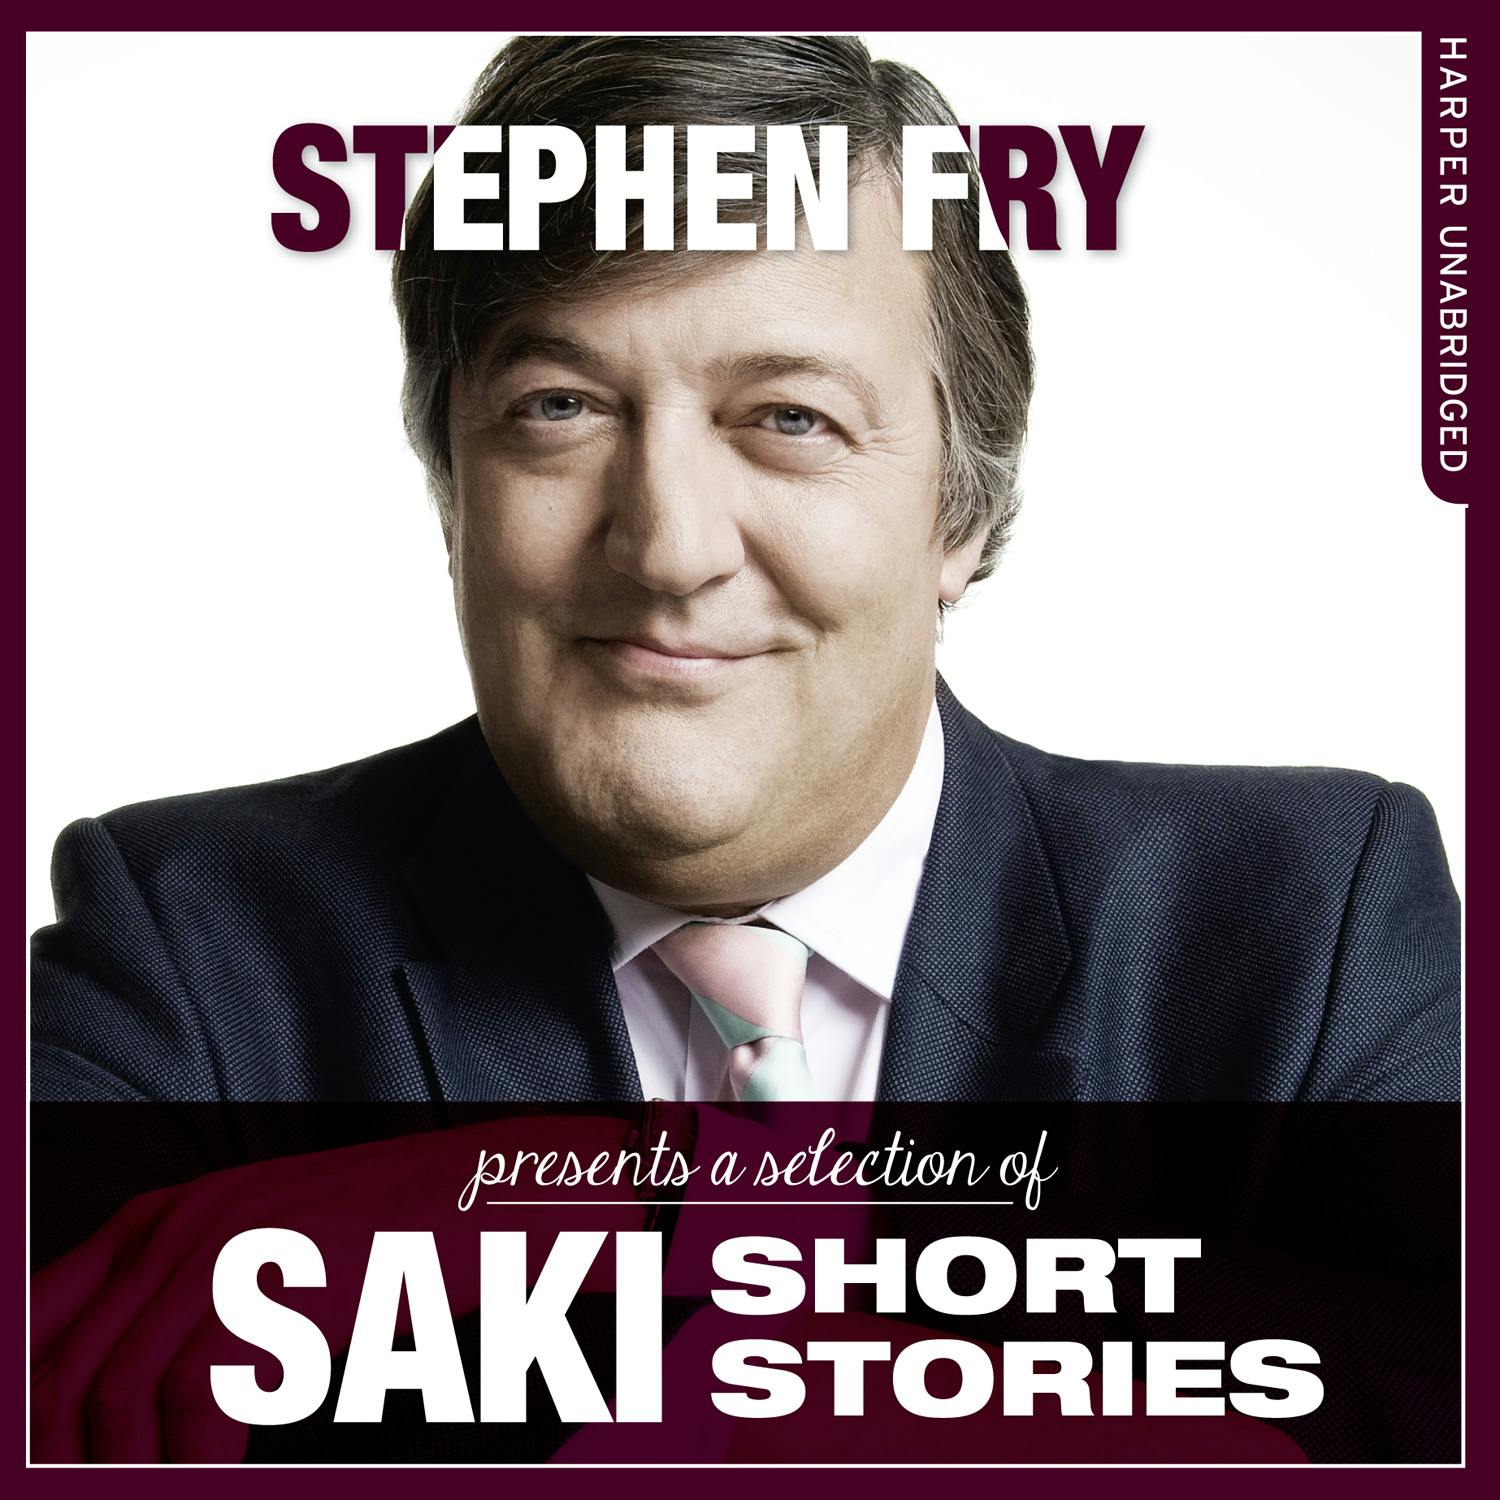 Short Stories by Saki (Stephen Fry Presents) - Hector Hugh Munro